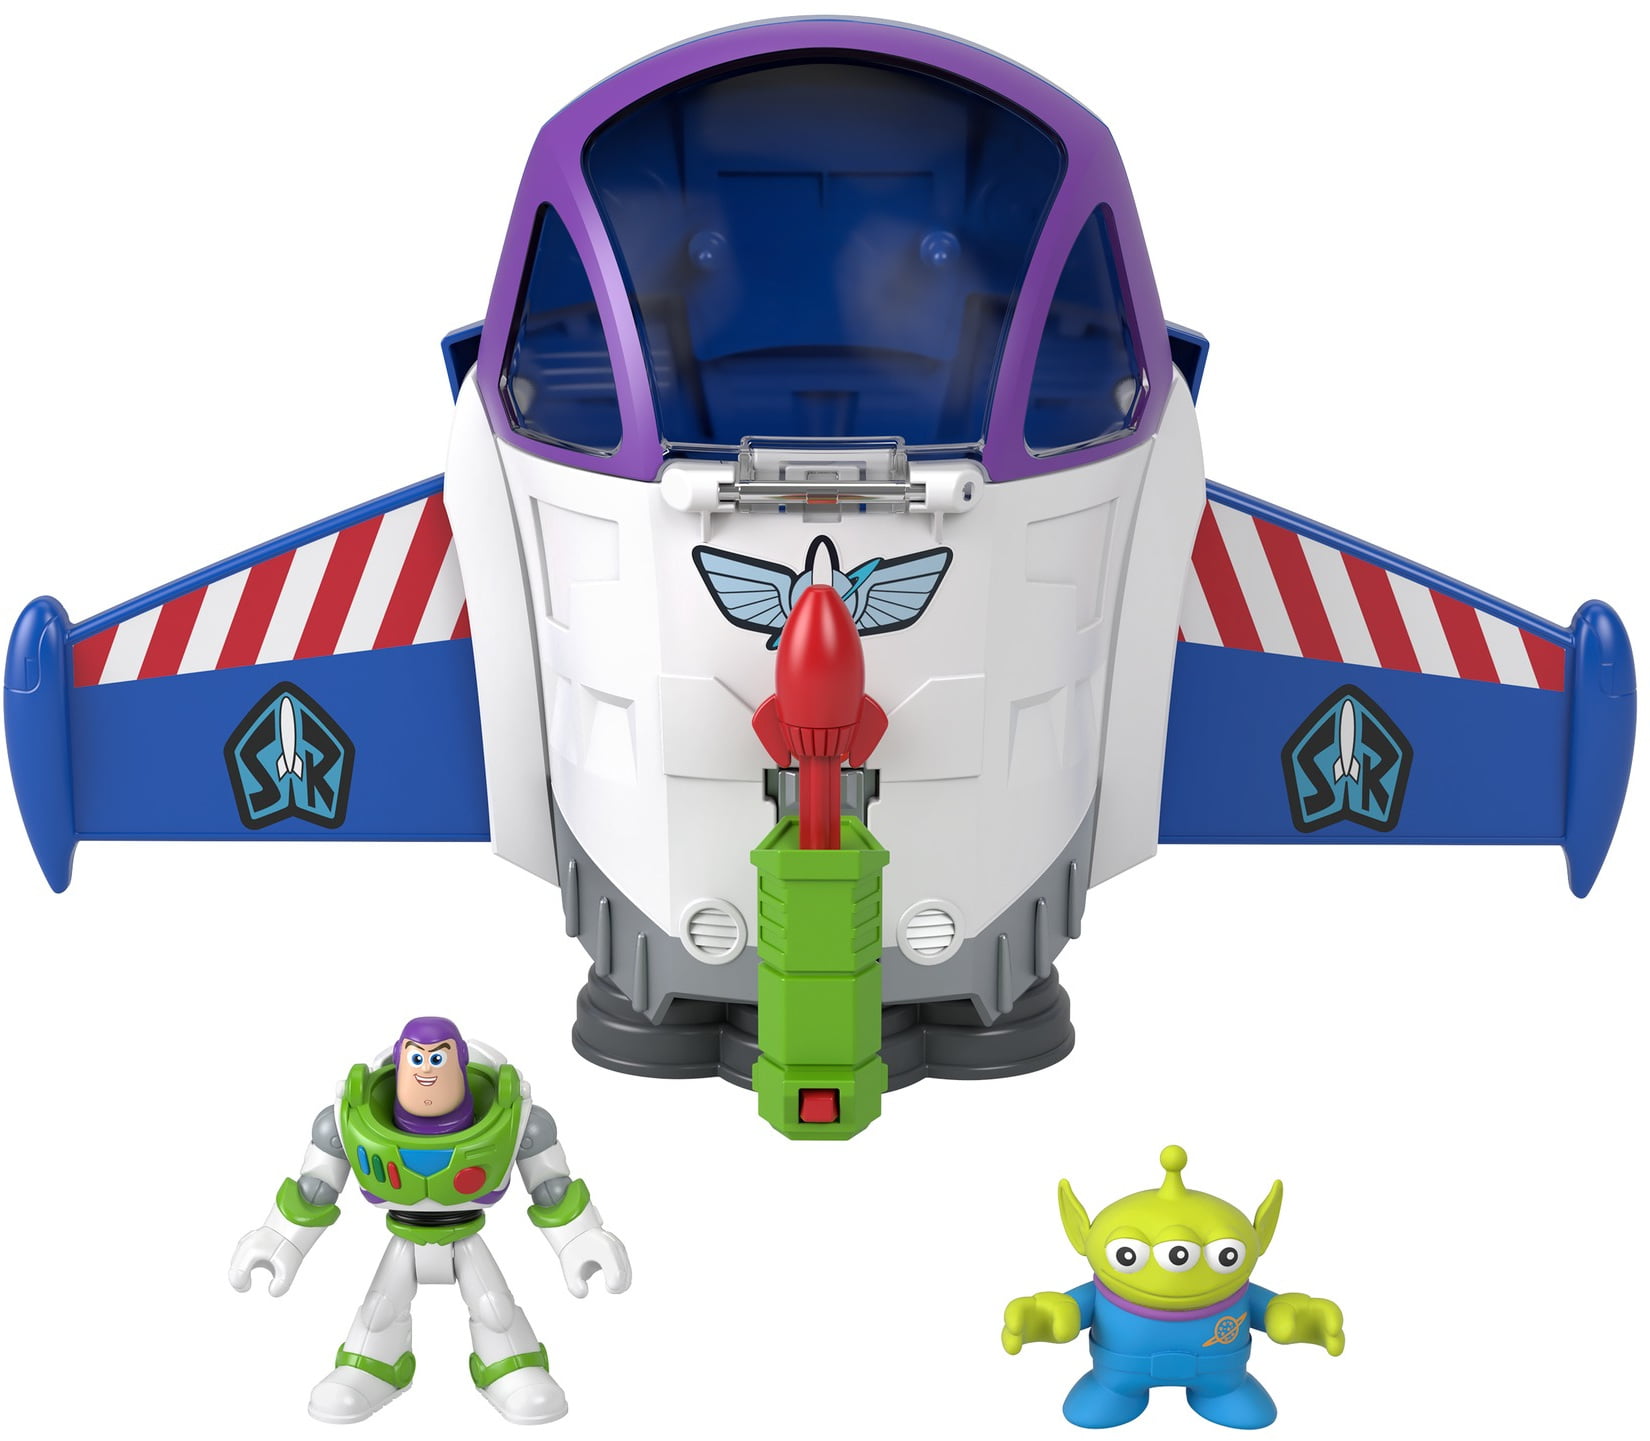 Disney Pixar Toy Story Buzz Lightyear Spaceship Figure Ideal Cake | Hot ...